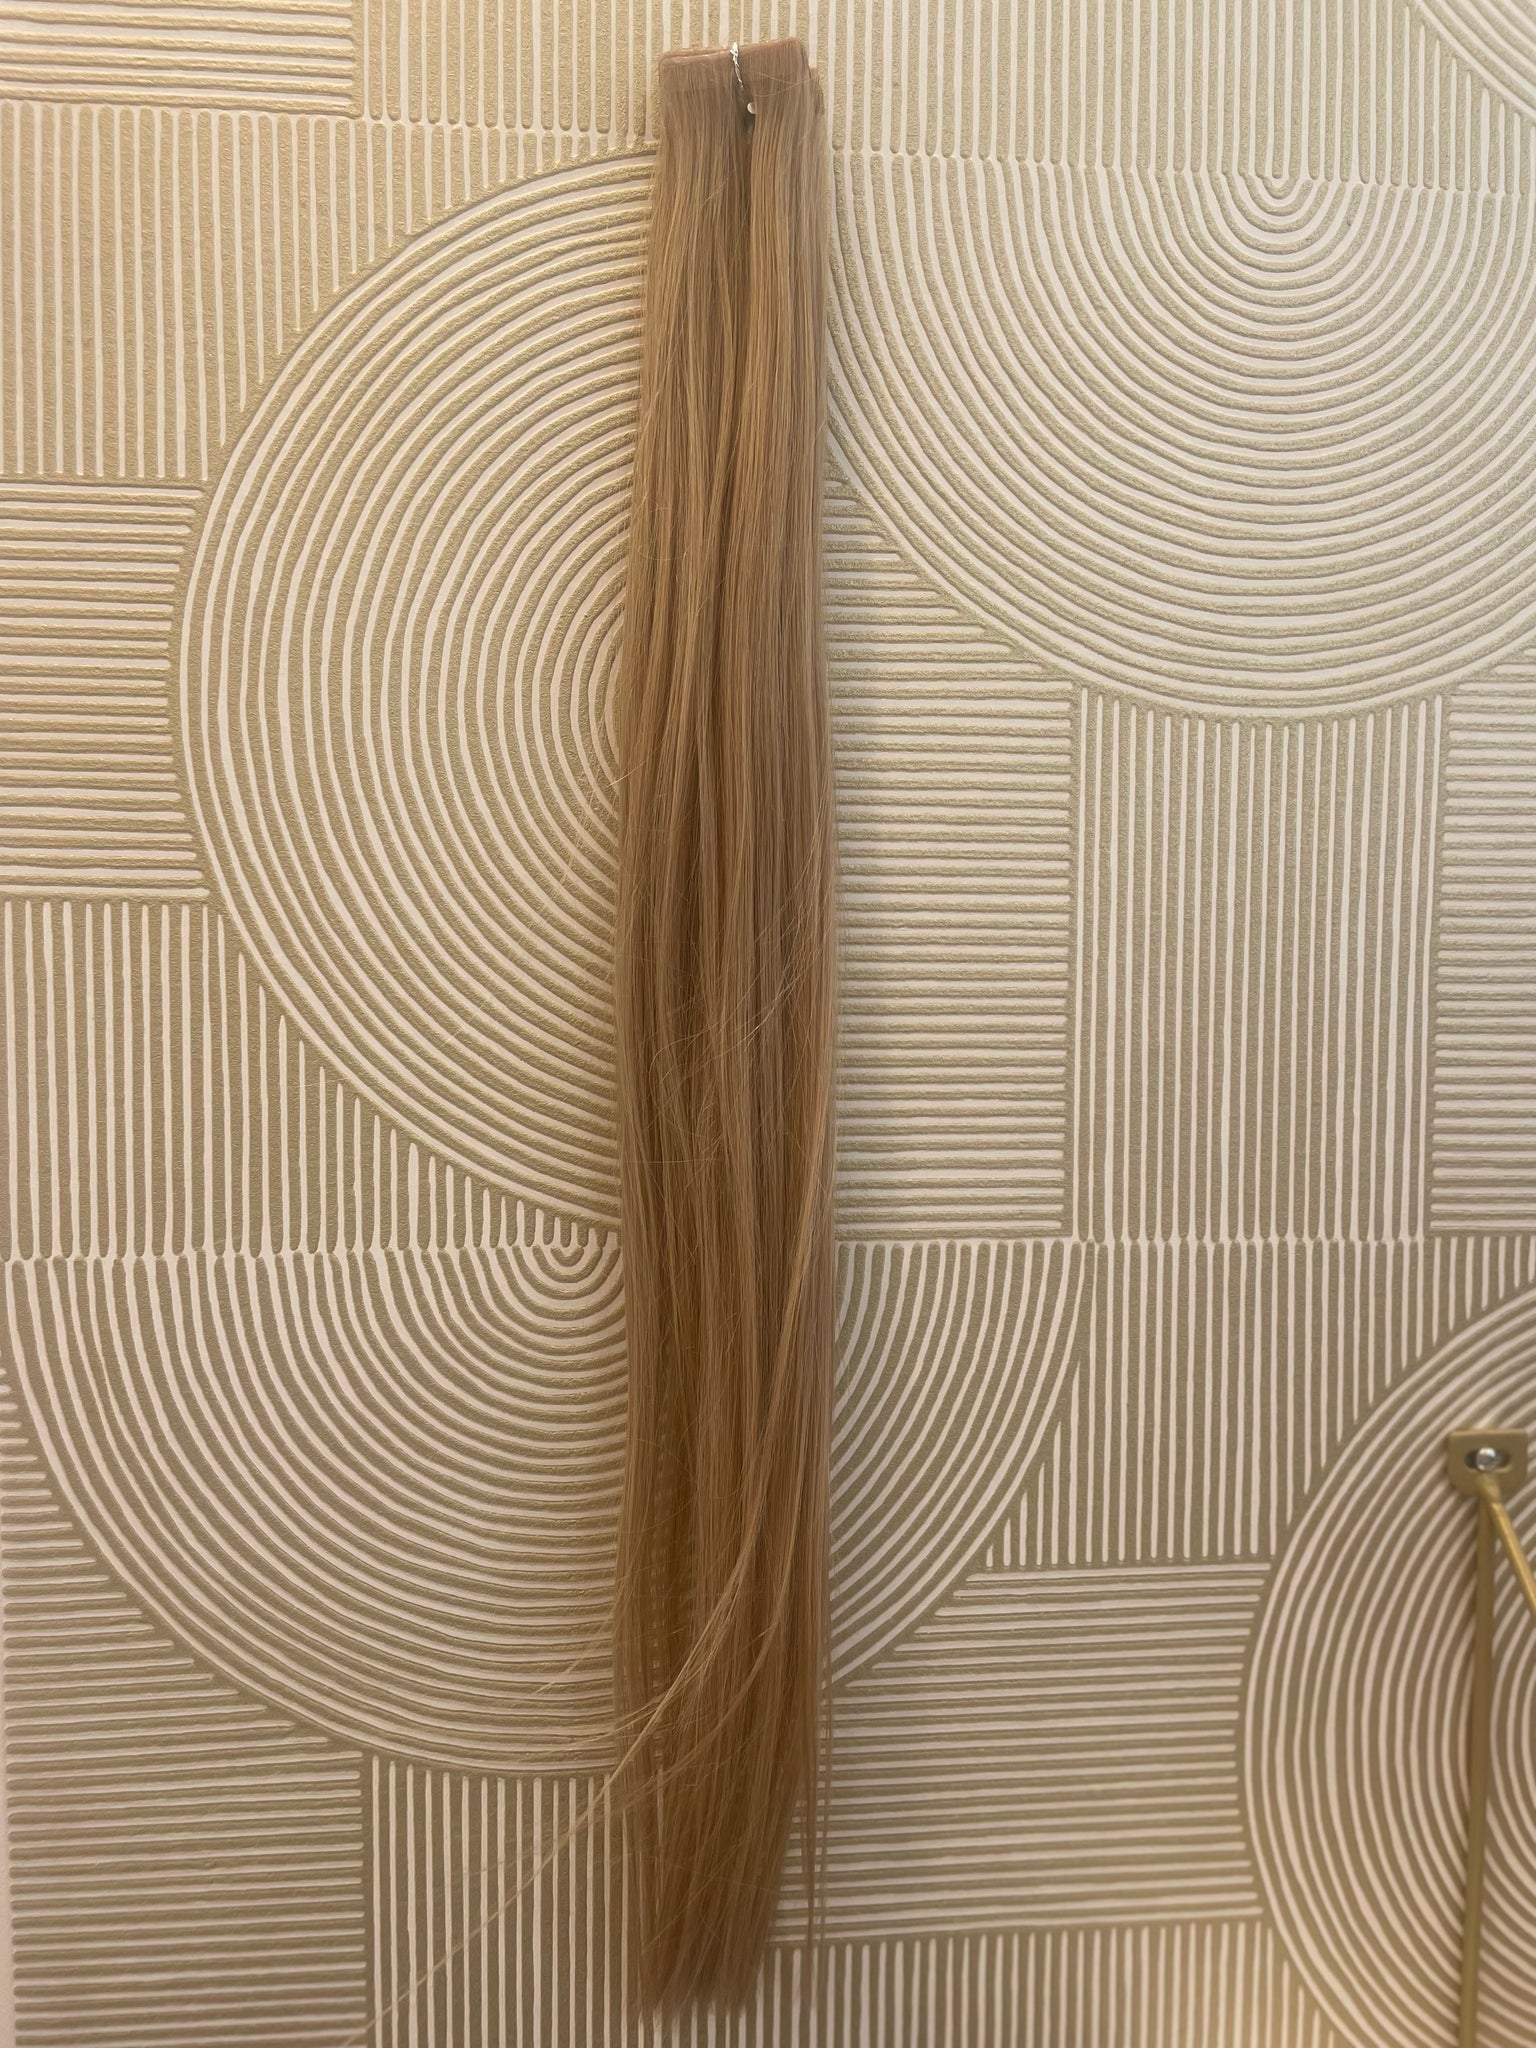 Extensions Tape invisible 50 gram (2) 55 cm European hair